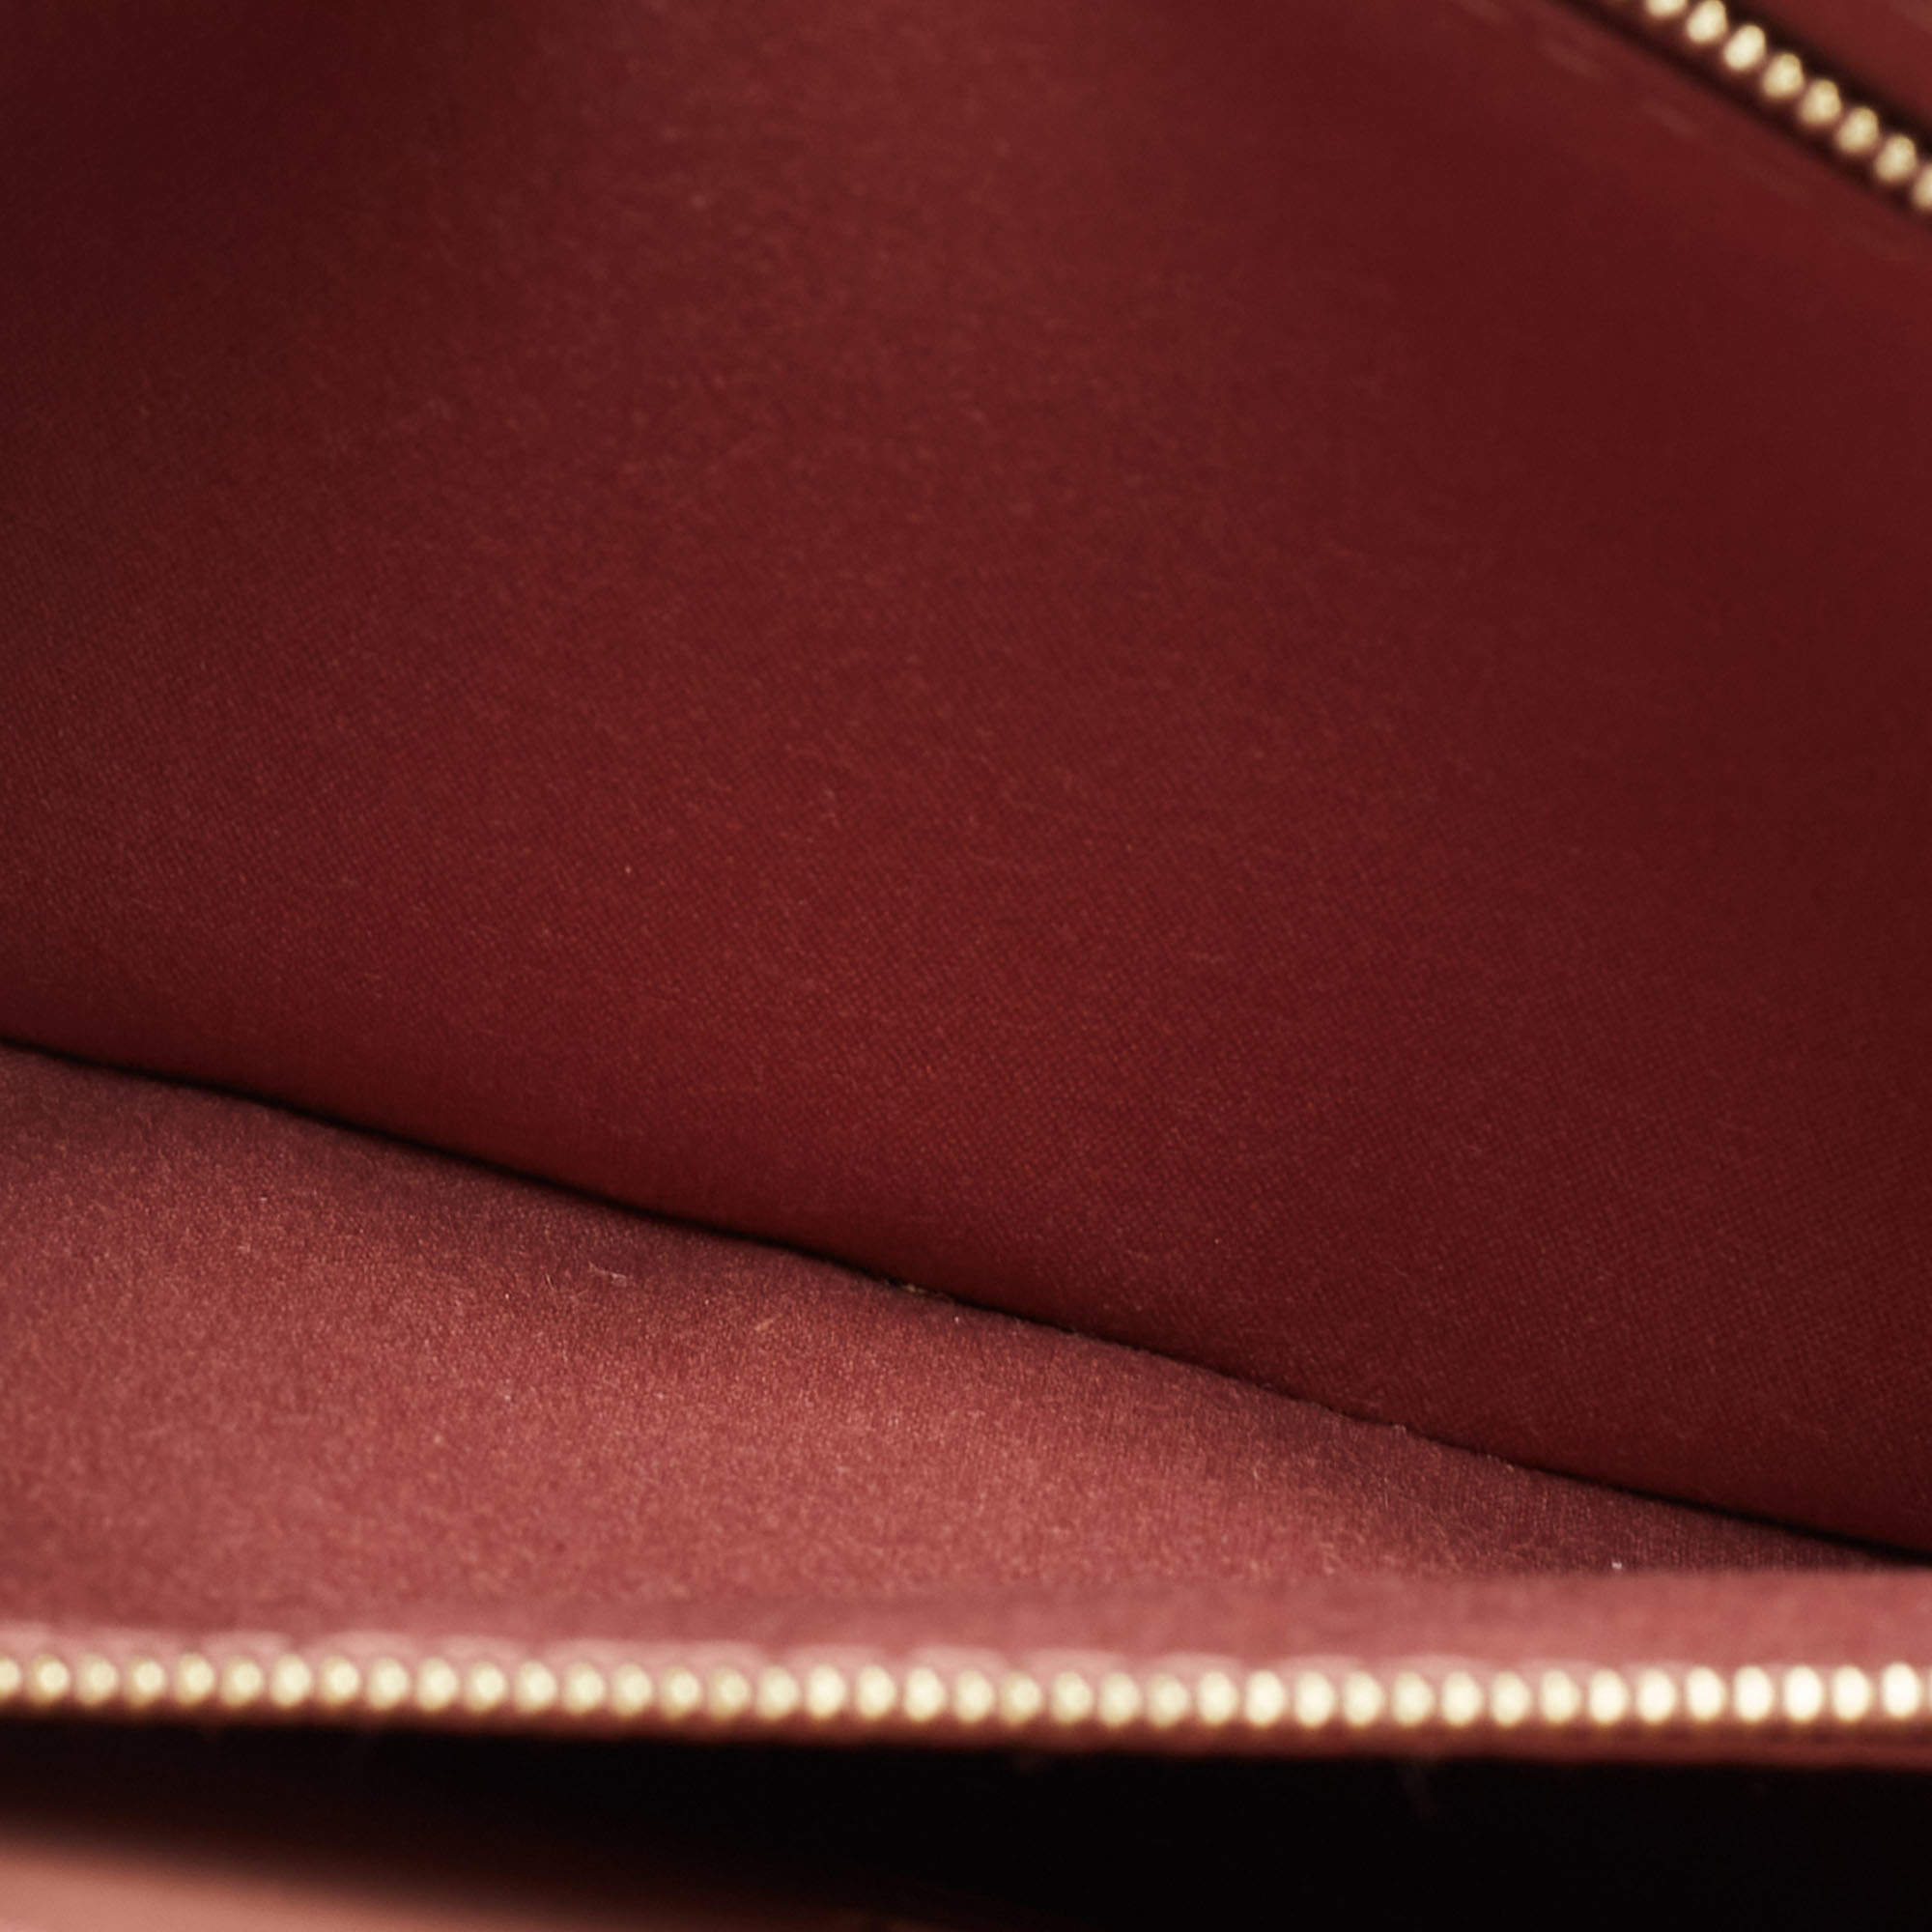 Wapity clutch bag Louis Vuitton Beige in Plastic - 35622061